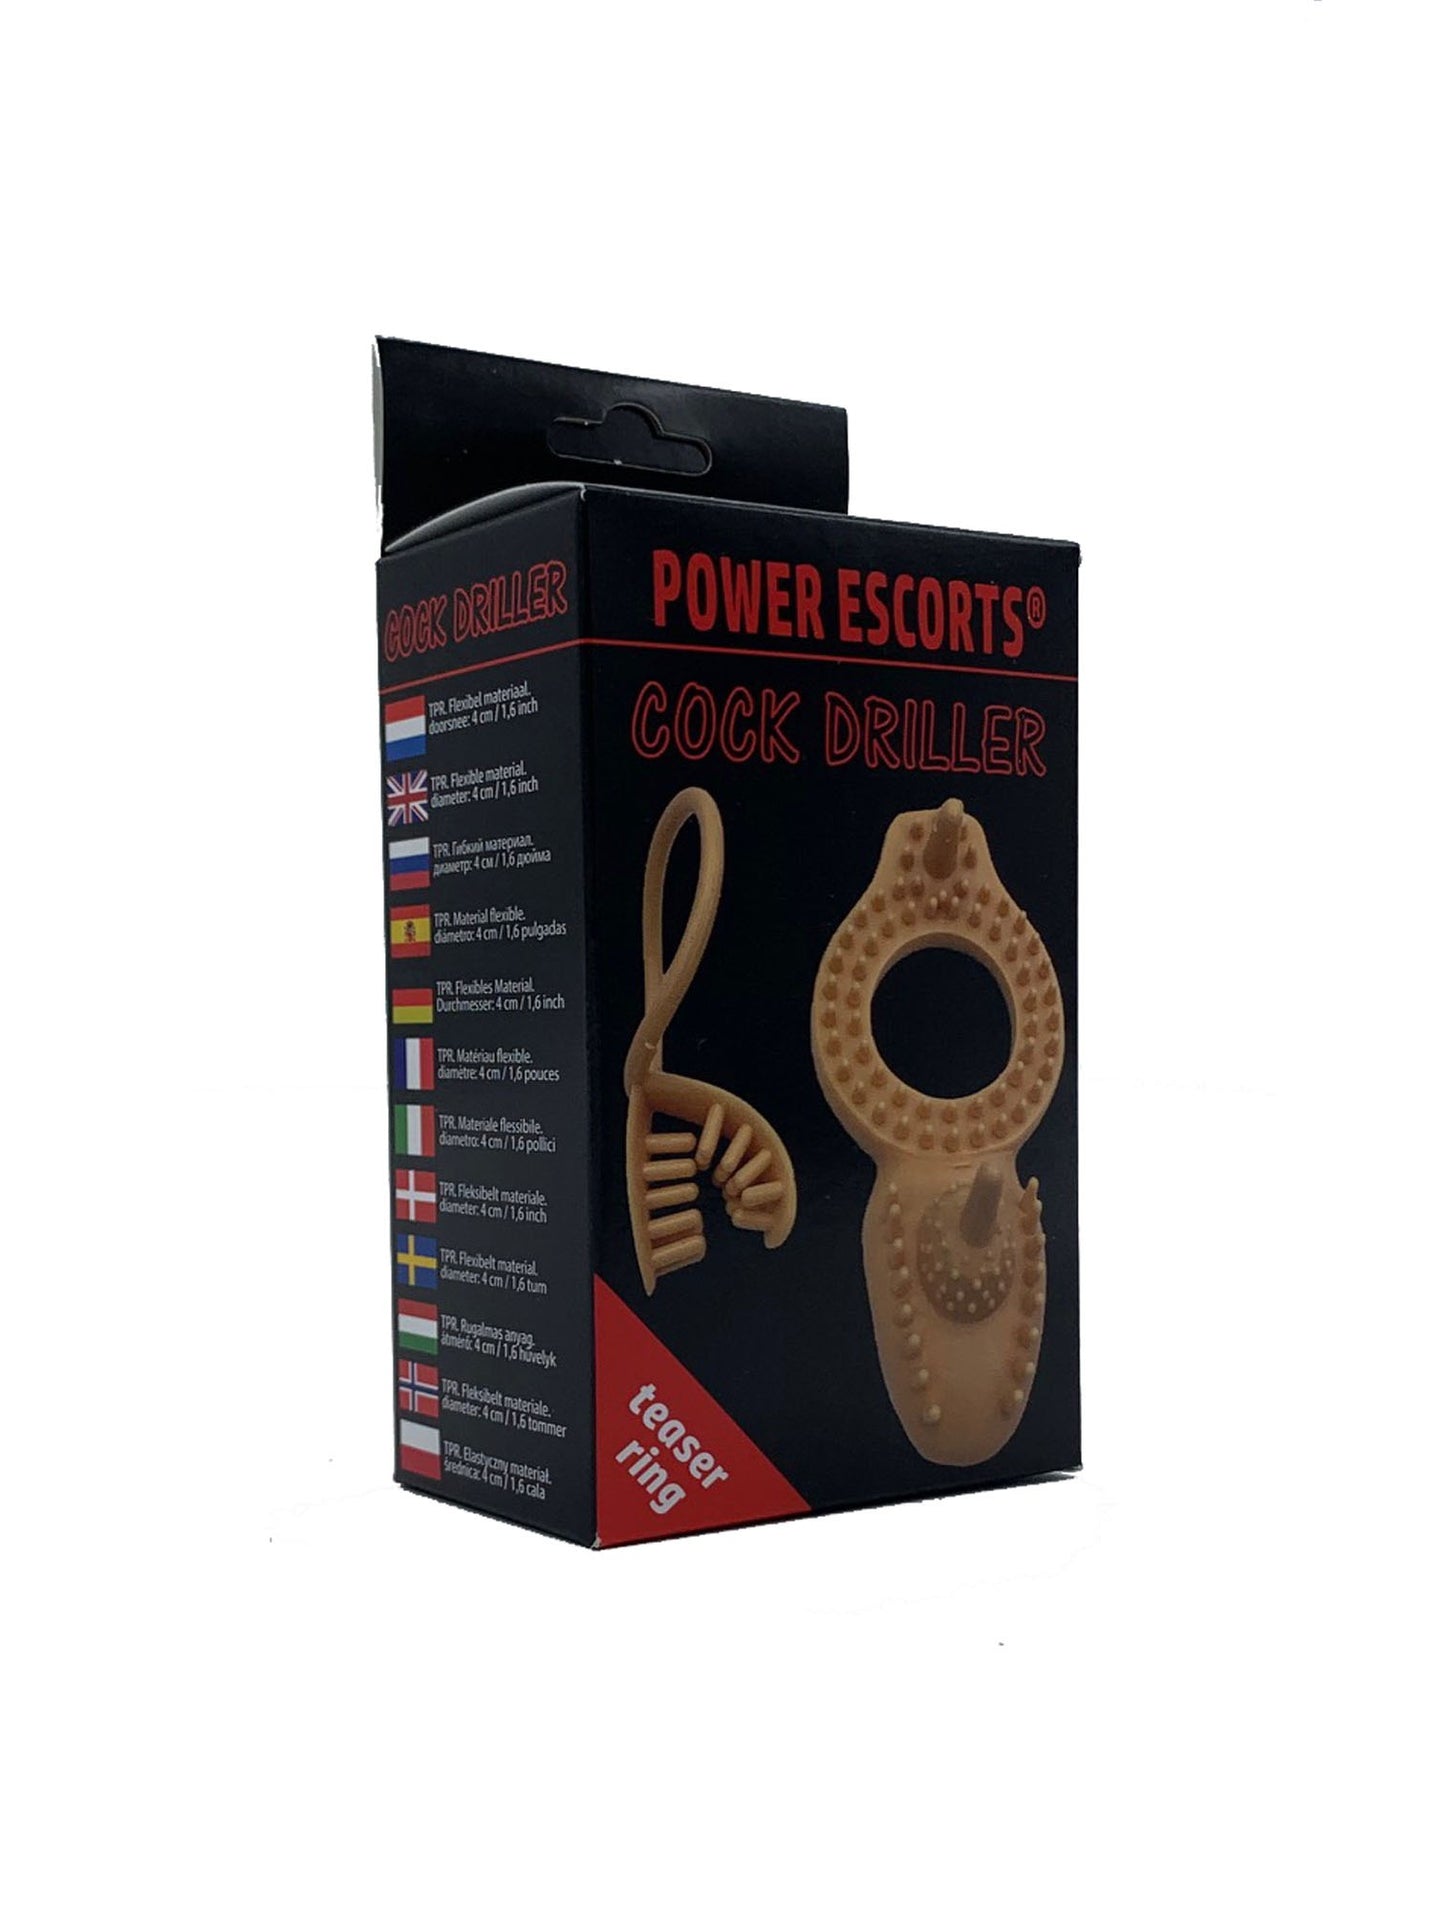 Power Escorts - BR238 - Cock Driller - Cockring Teaser Ring - Ultra Flexibile